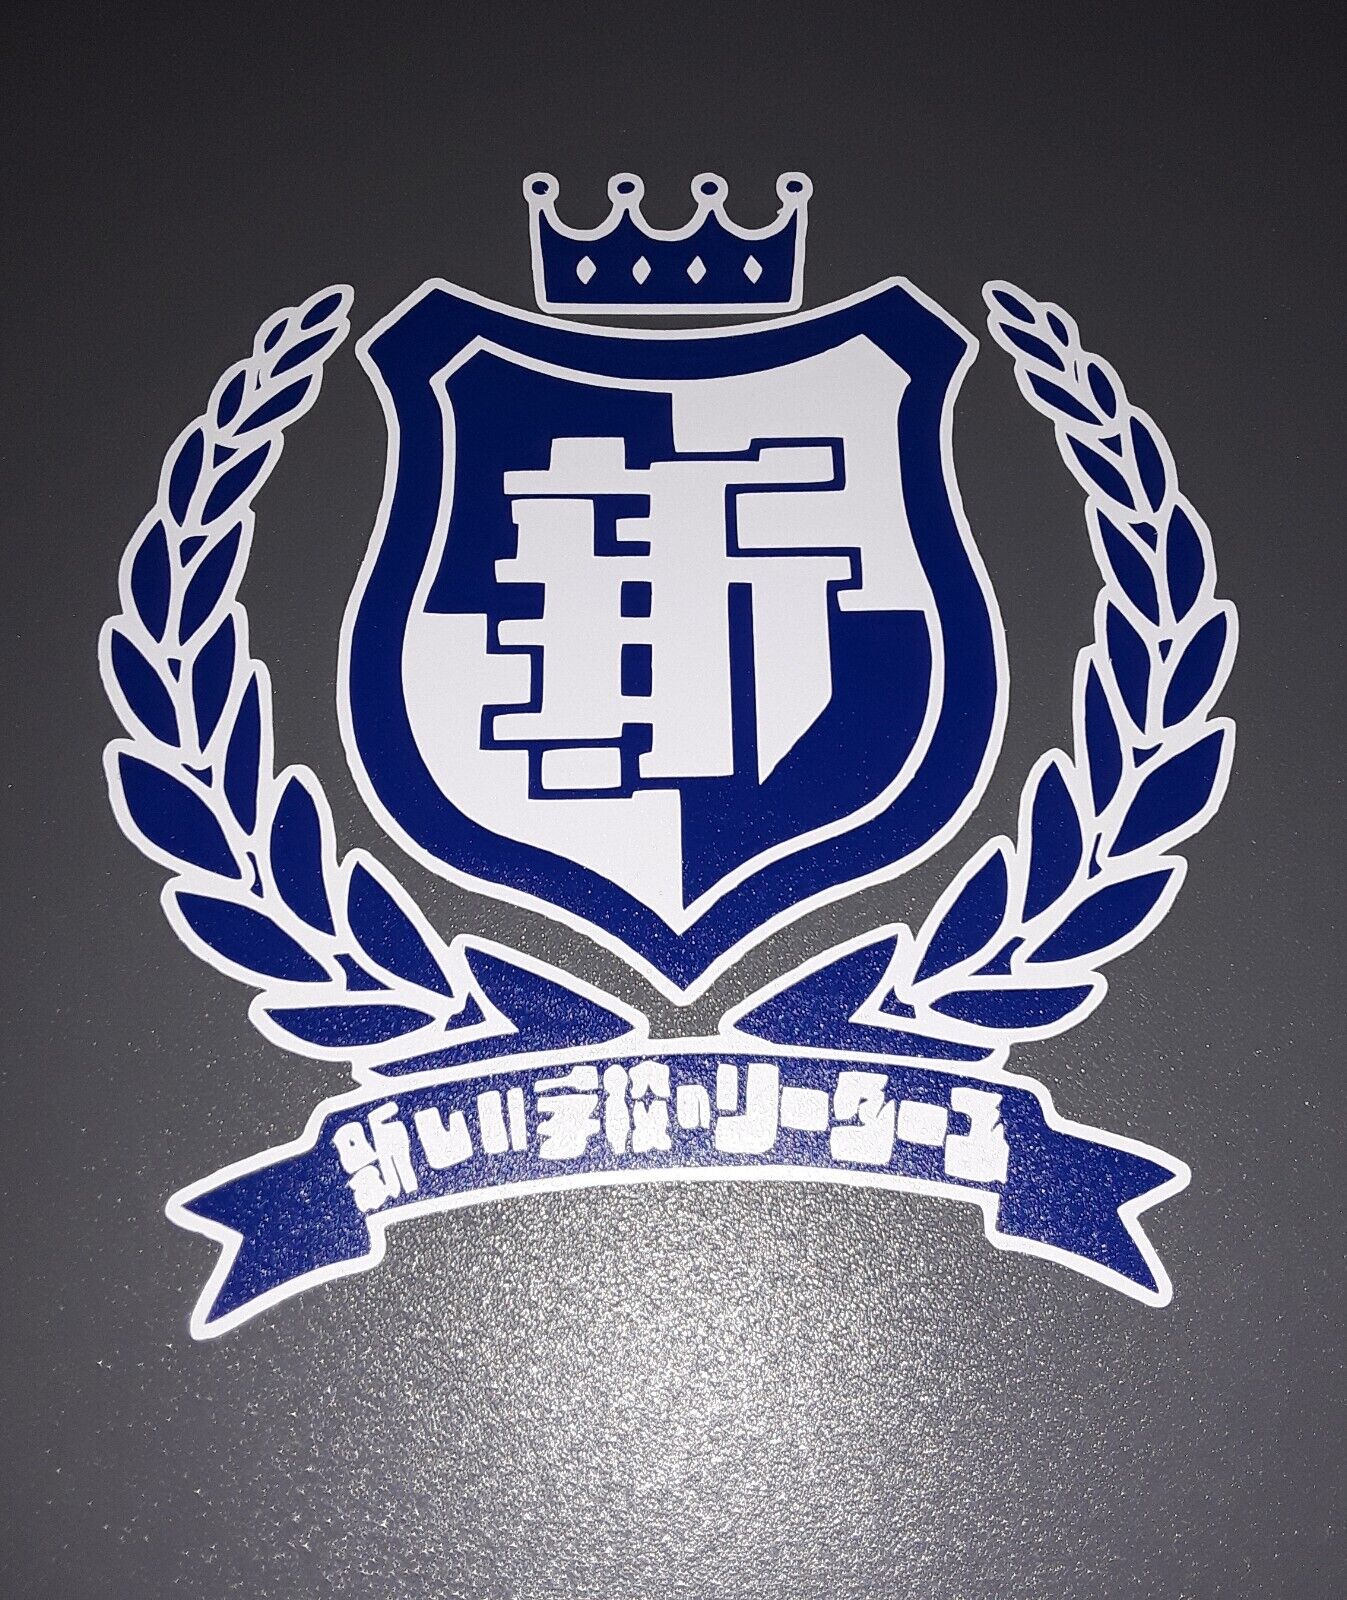 Atarashii Gakko 新しい学校のリーダーズ Logo J-Pop Band Sticker Vinyl Decal Waterproof